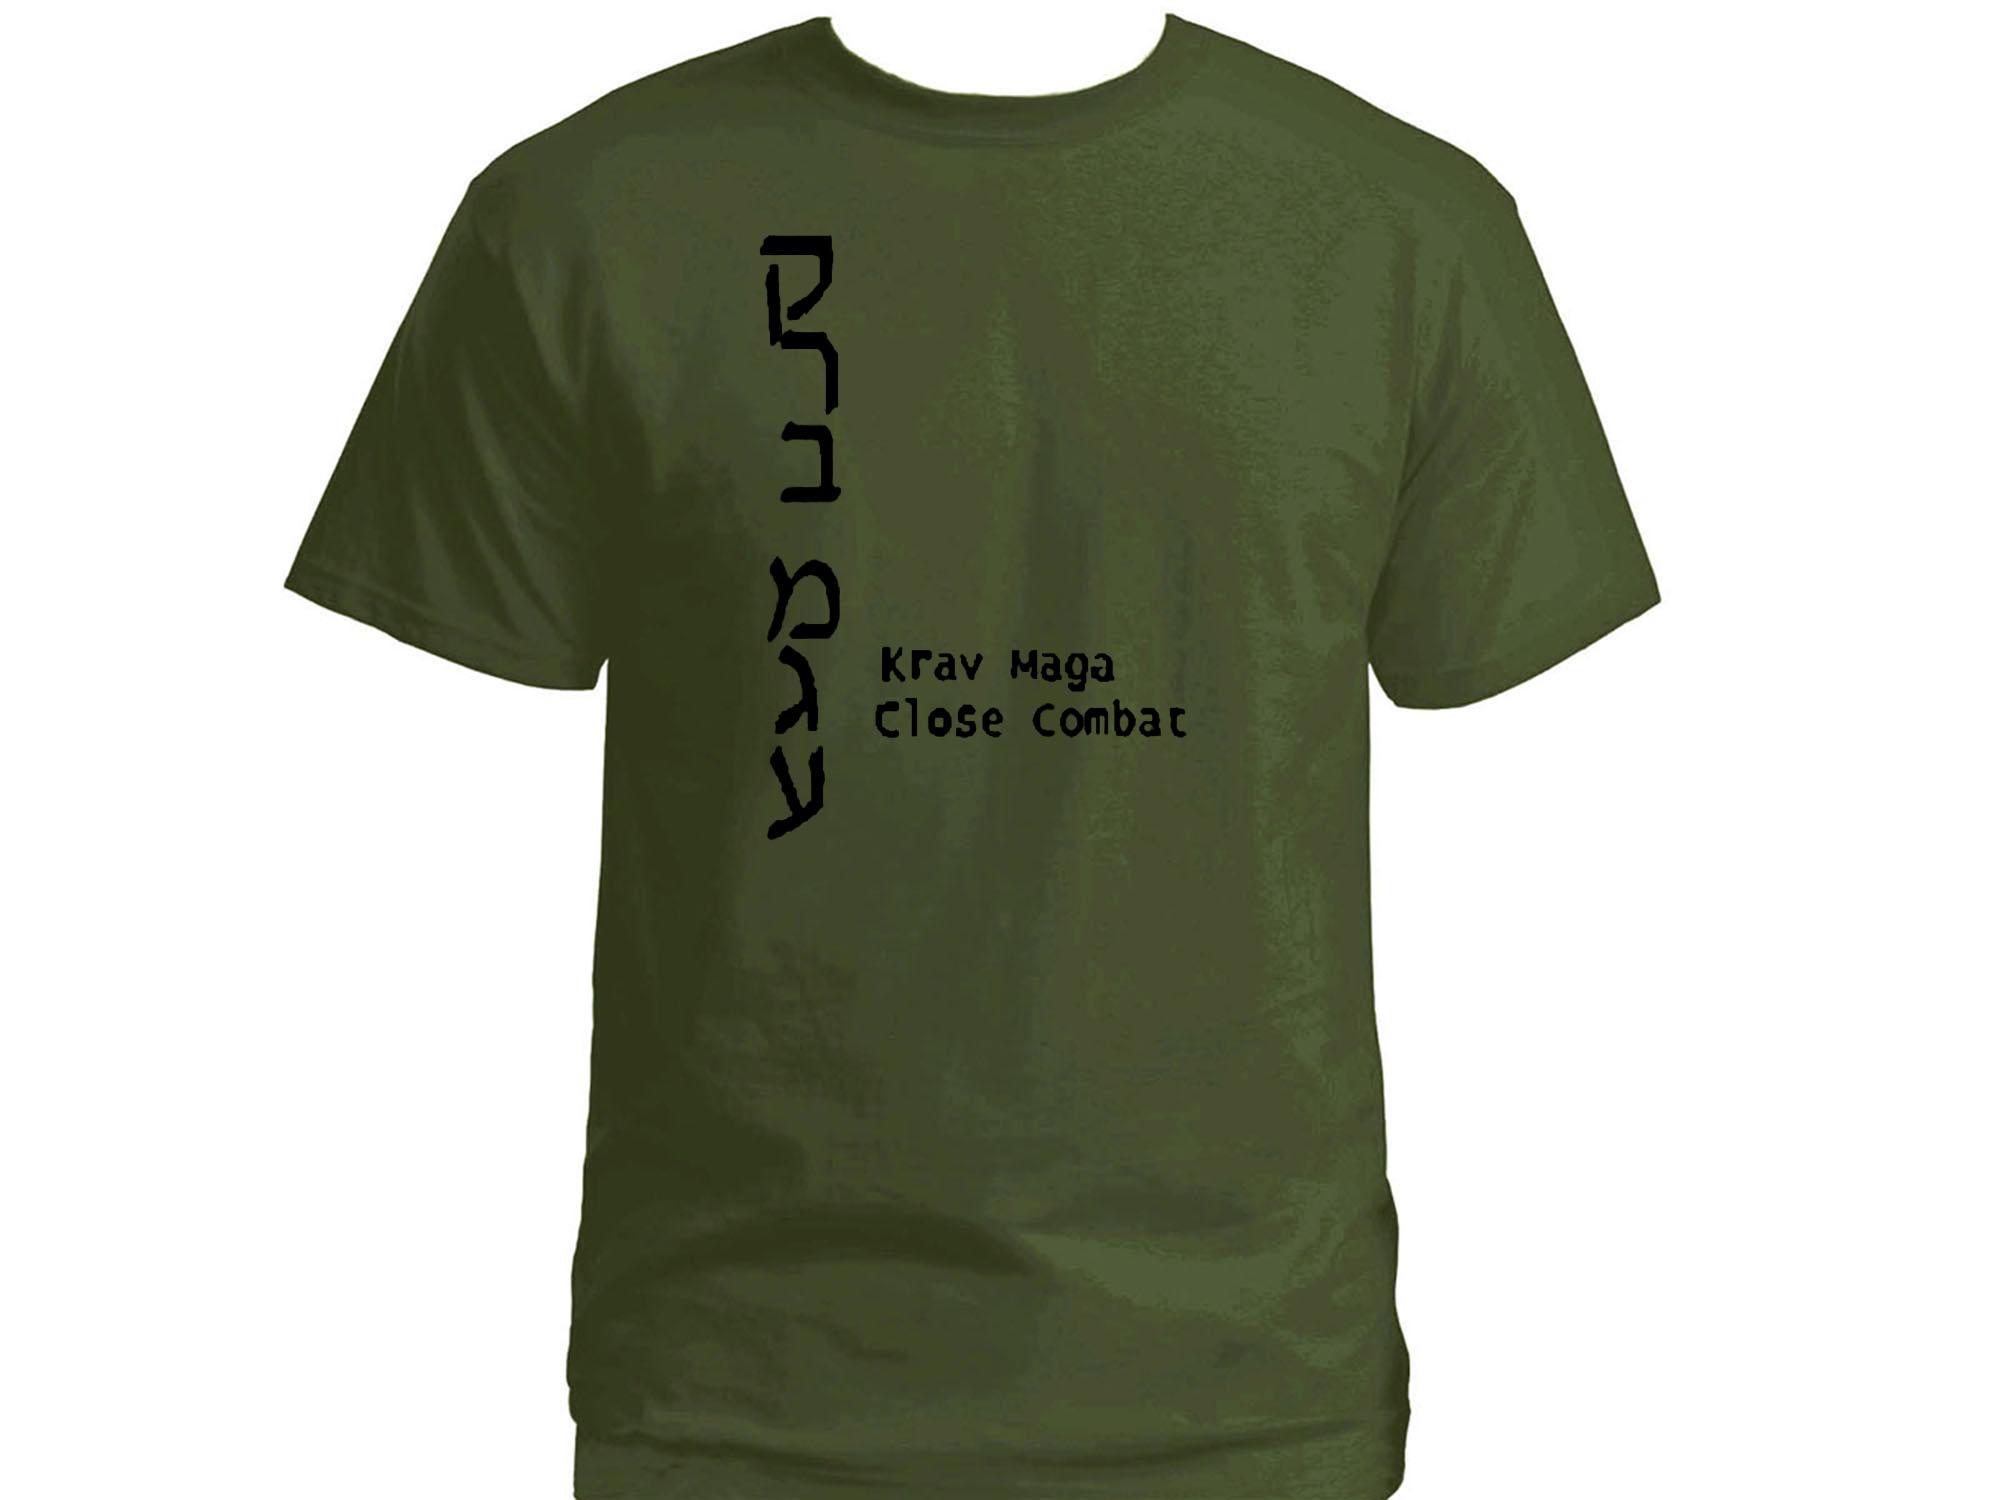 Krav Maga Hebrew/English army green t-shirt